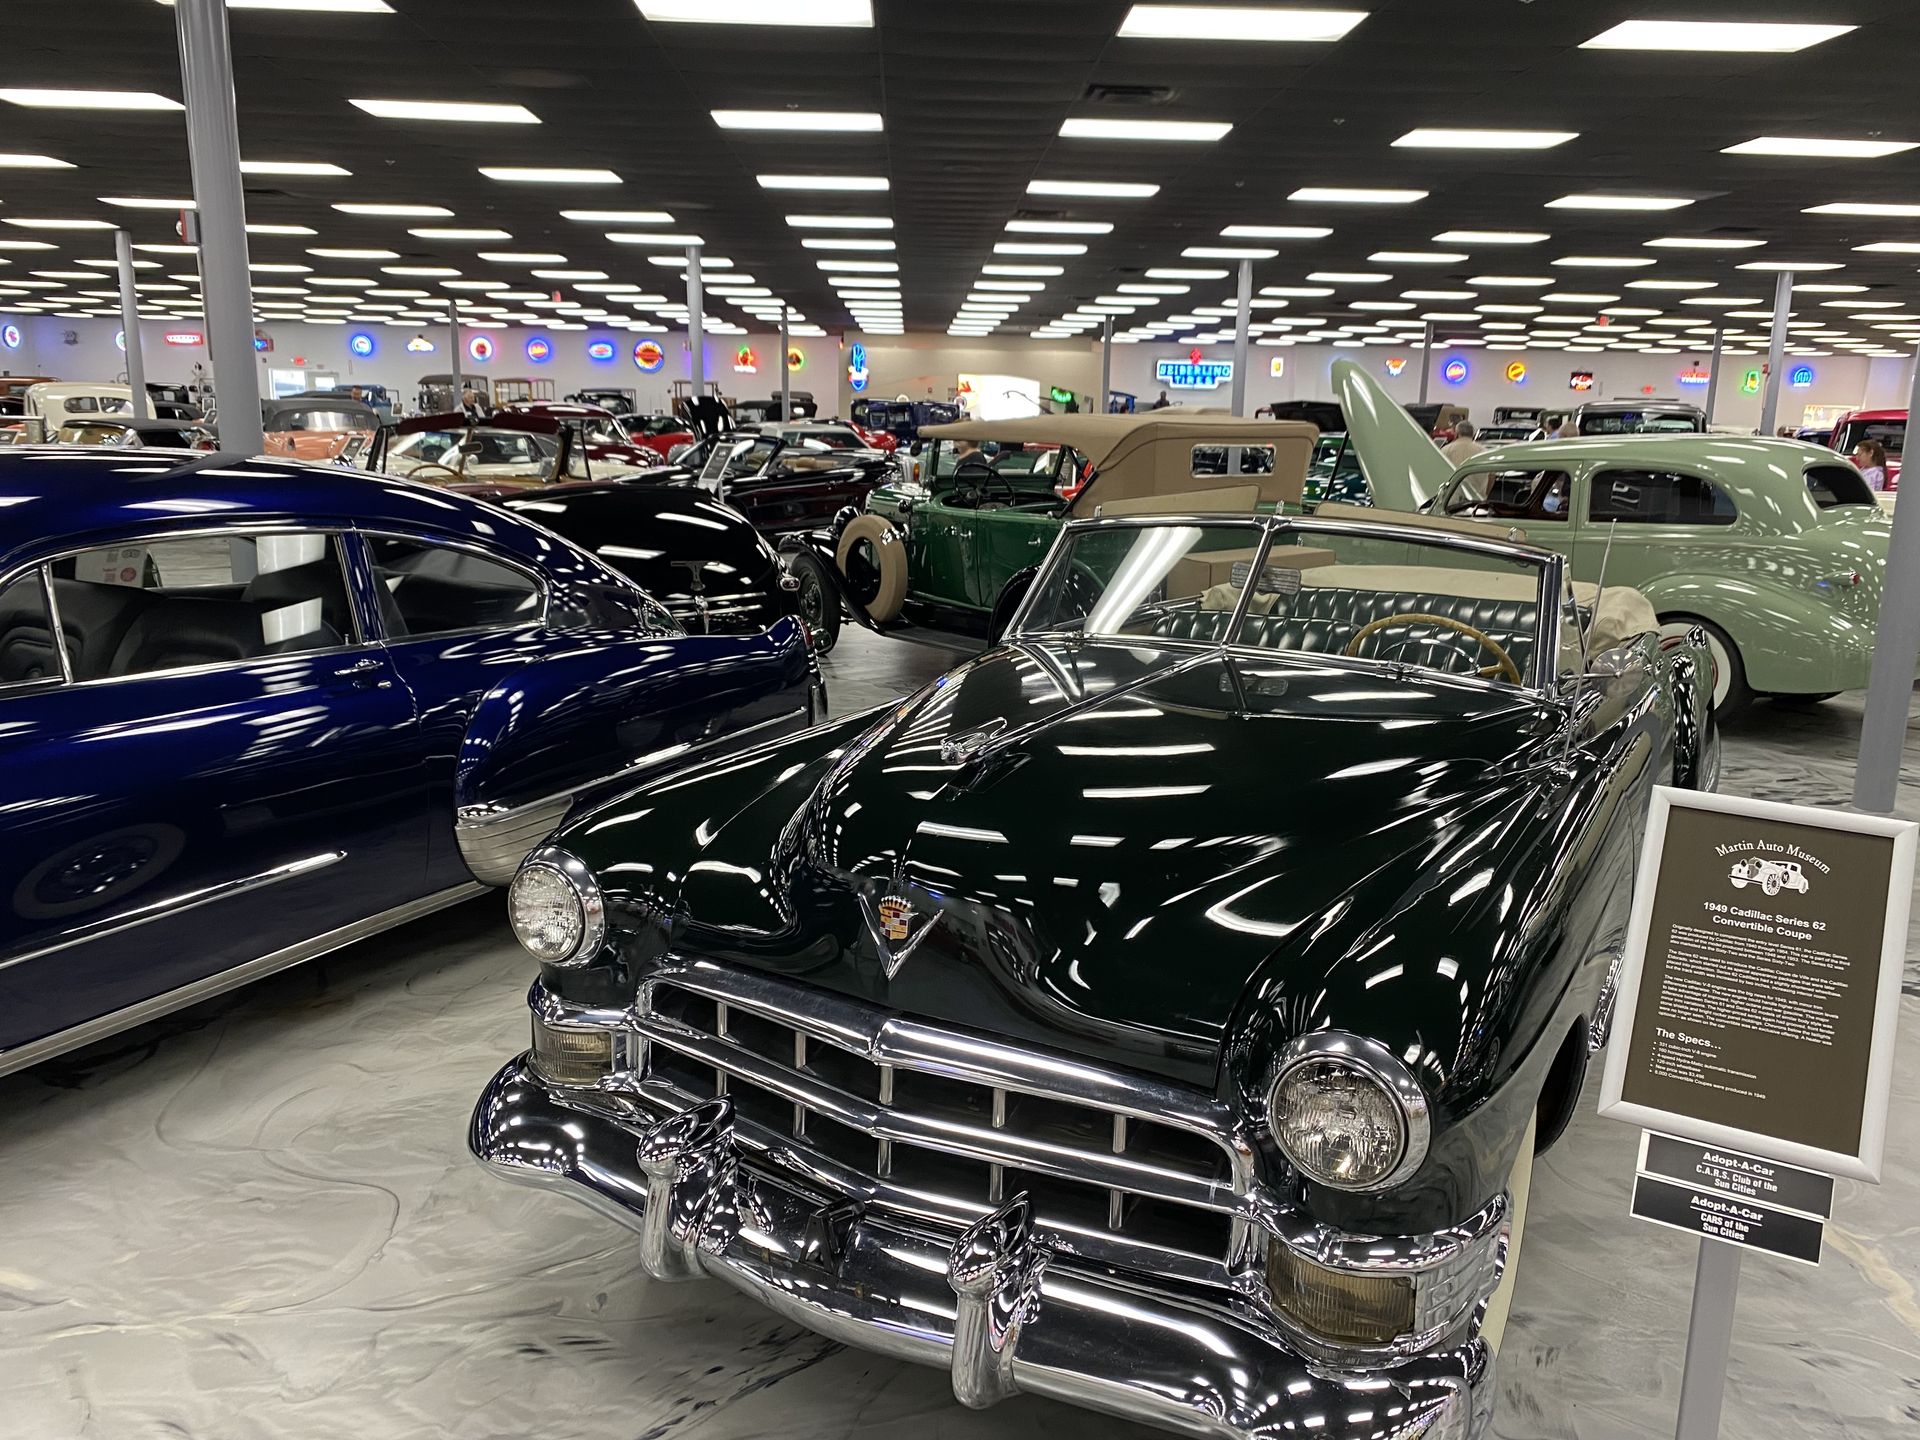 Martin Auto Museum celebrating first anniversary in new Phoenix